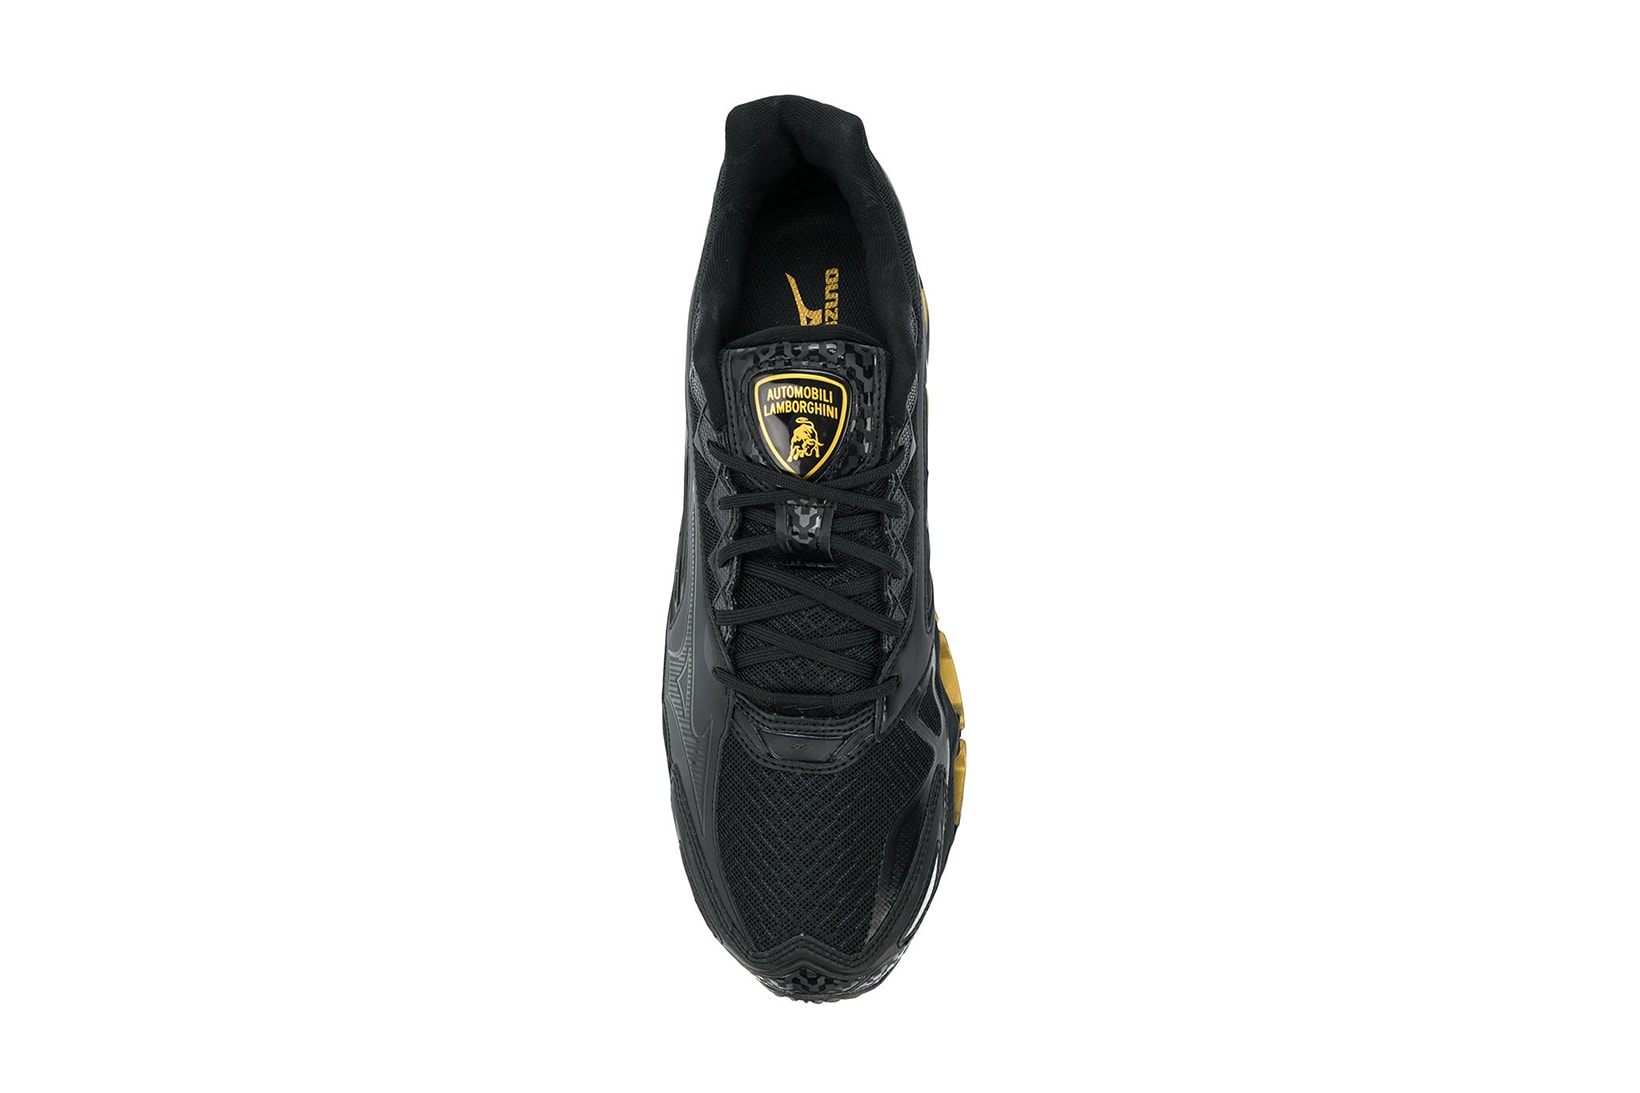 Lamborghini Mizuno Wave Tenjin 3 carbon fiber running sneaker shoe black gold branding logo 2018